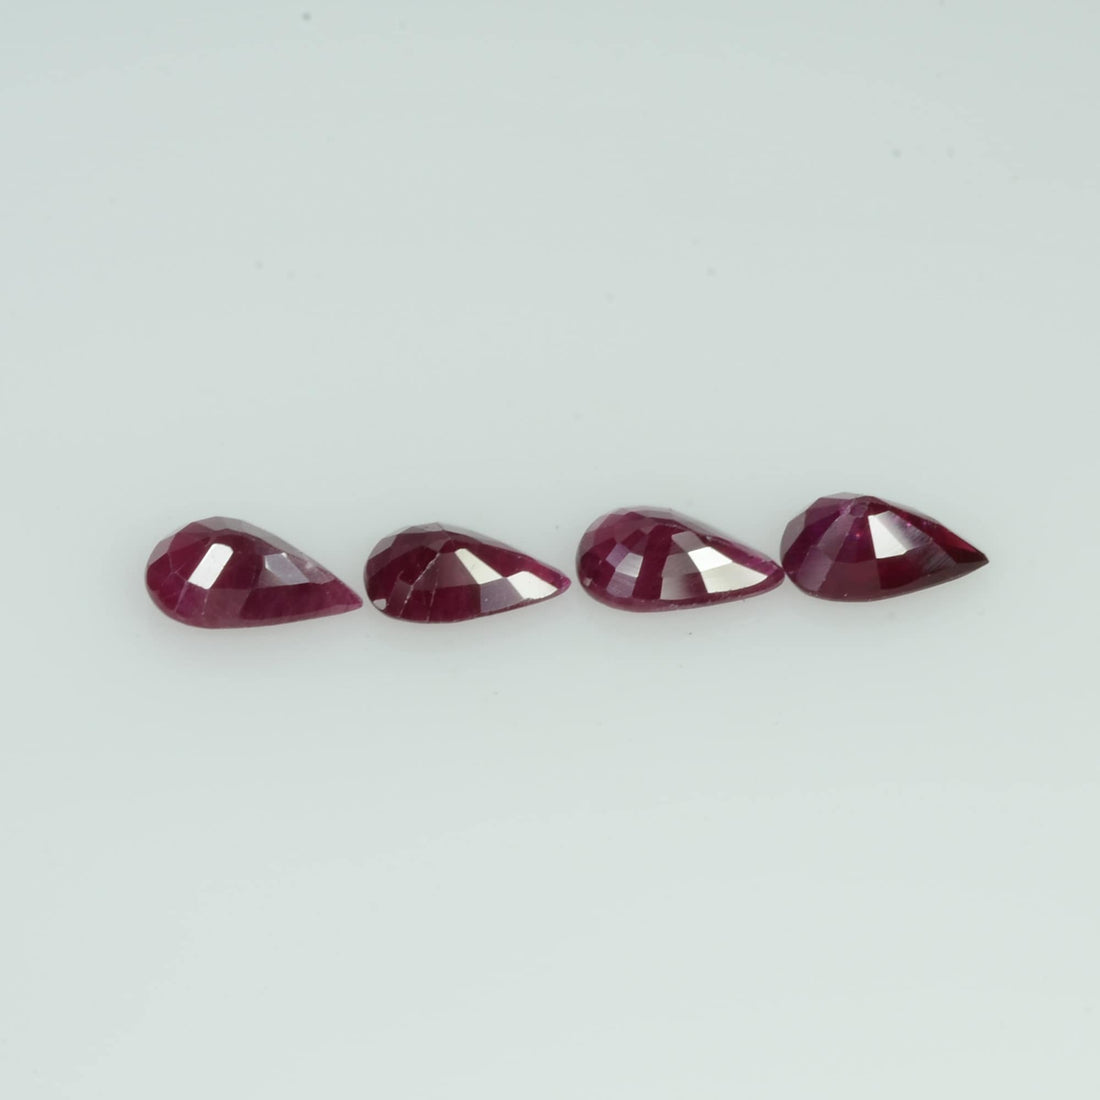 6x4 MM Natural Burma Ruby Loose Gemstone Pear Cut